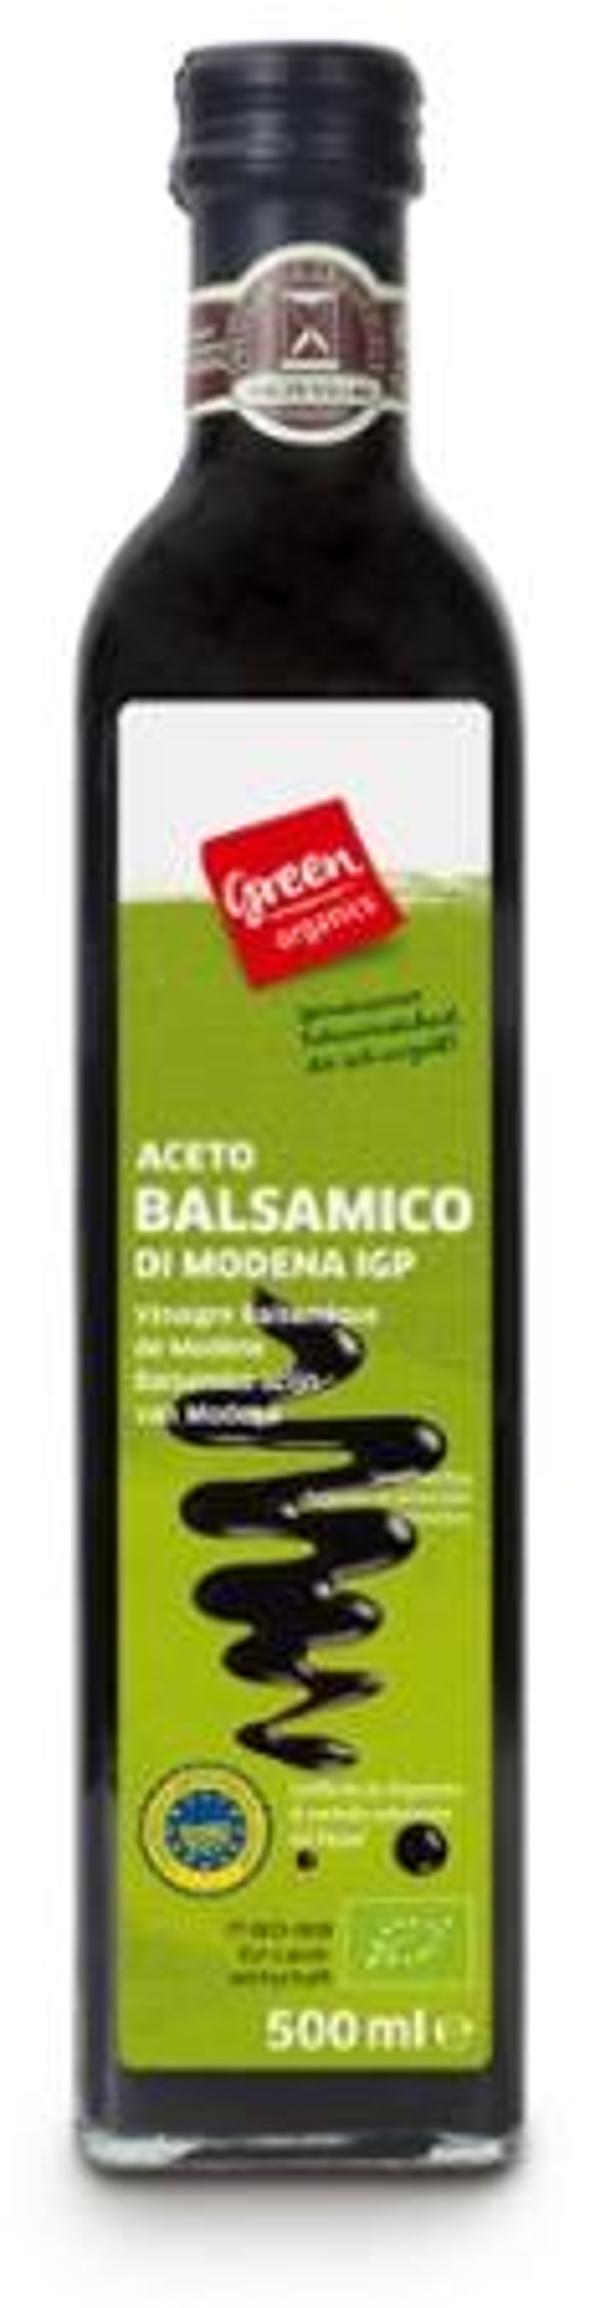 Produktfoto zu Aceto balsamico 0,5l